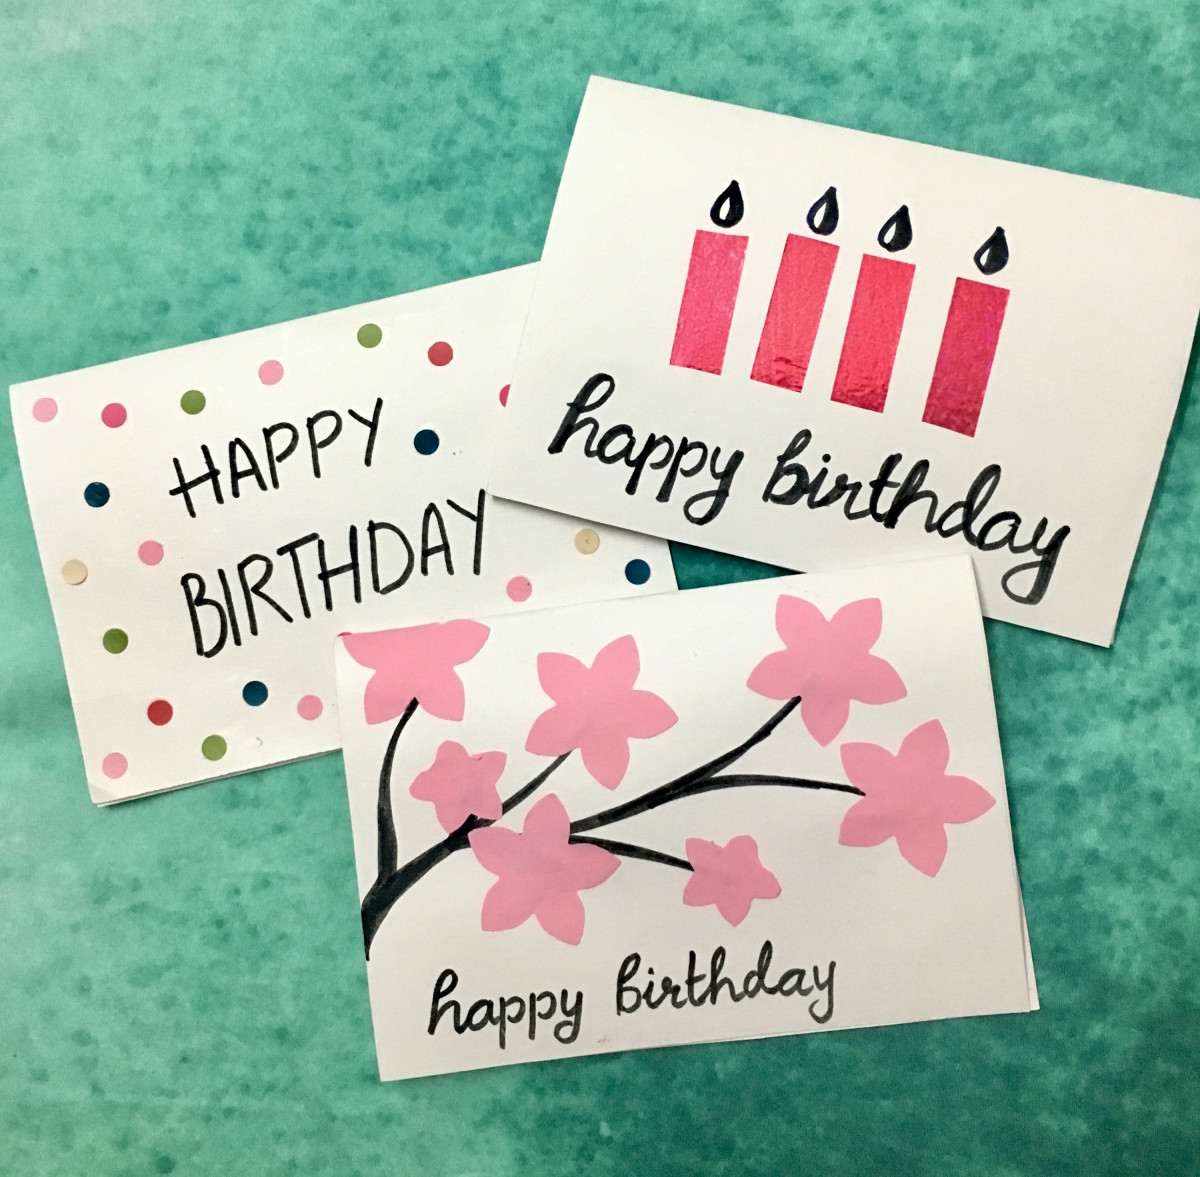 free printable birthday cards - best birthday card ideas funny homemade ...